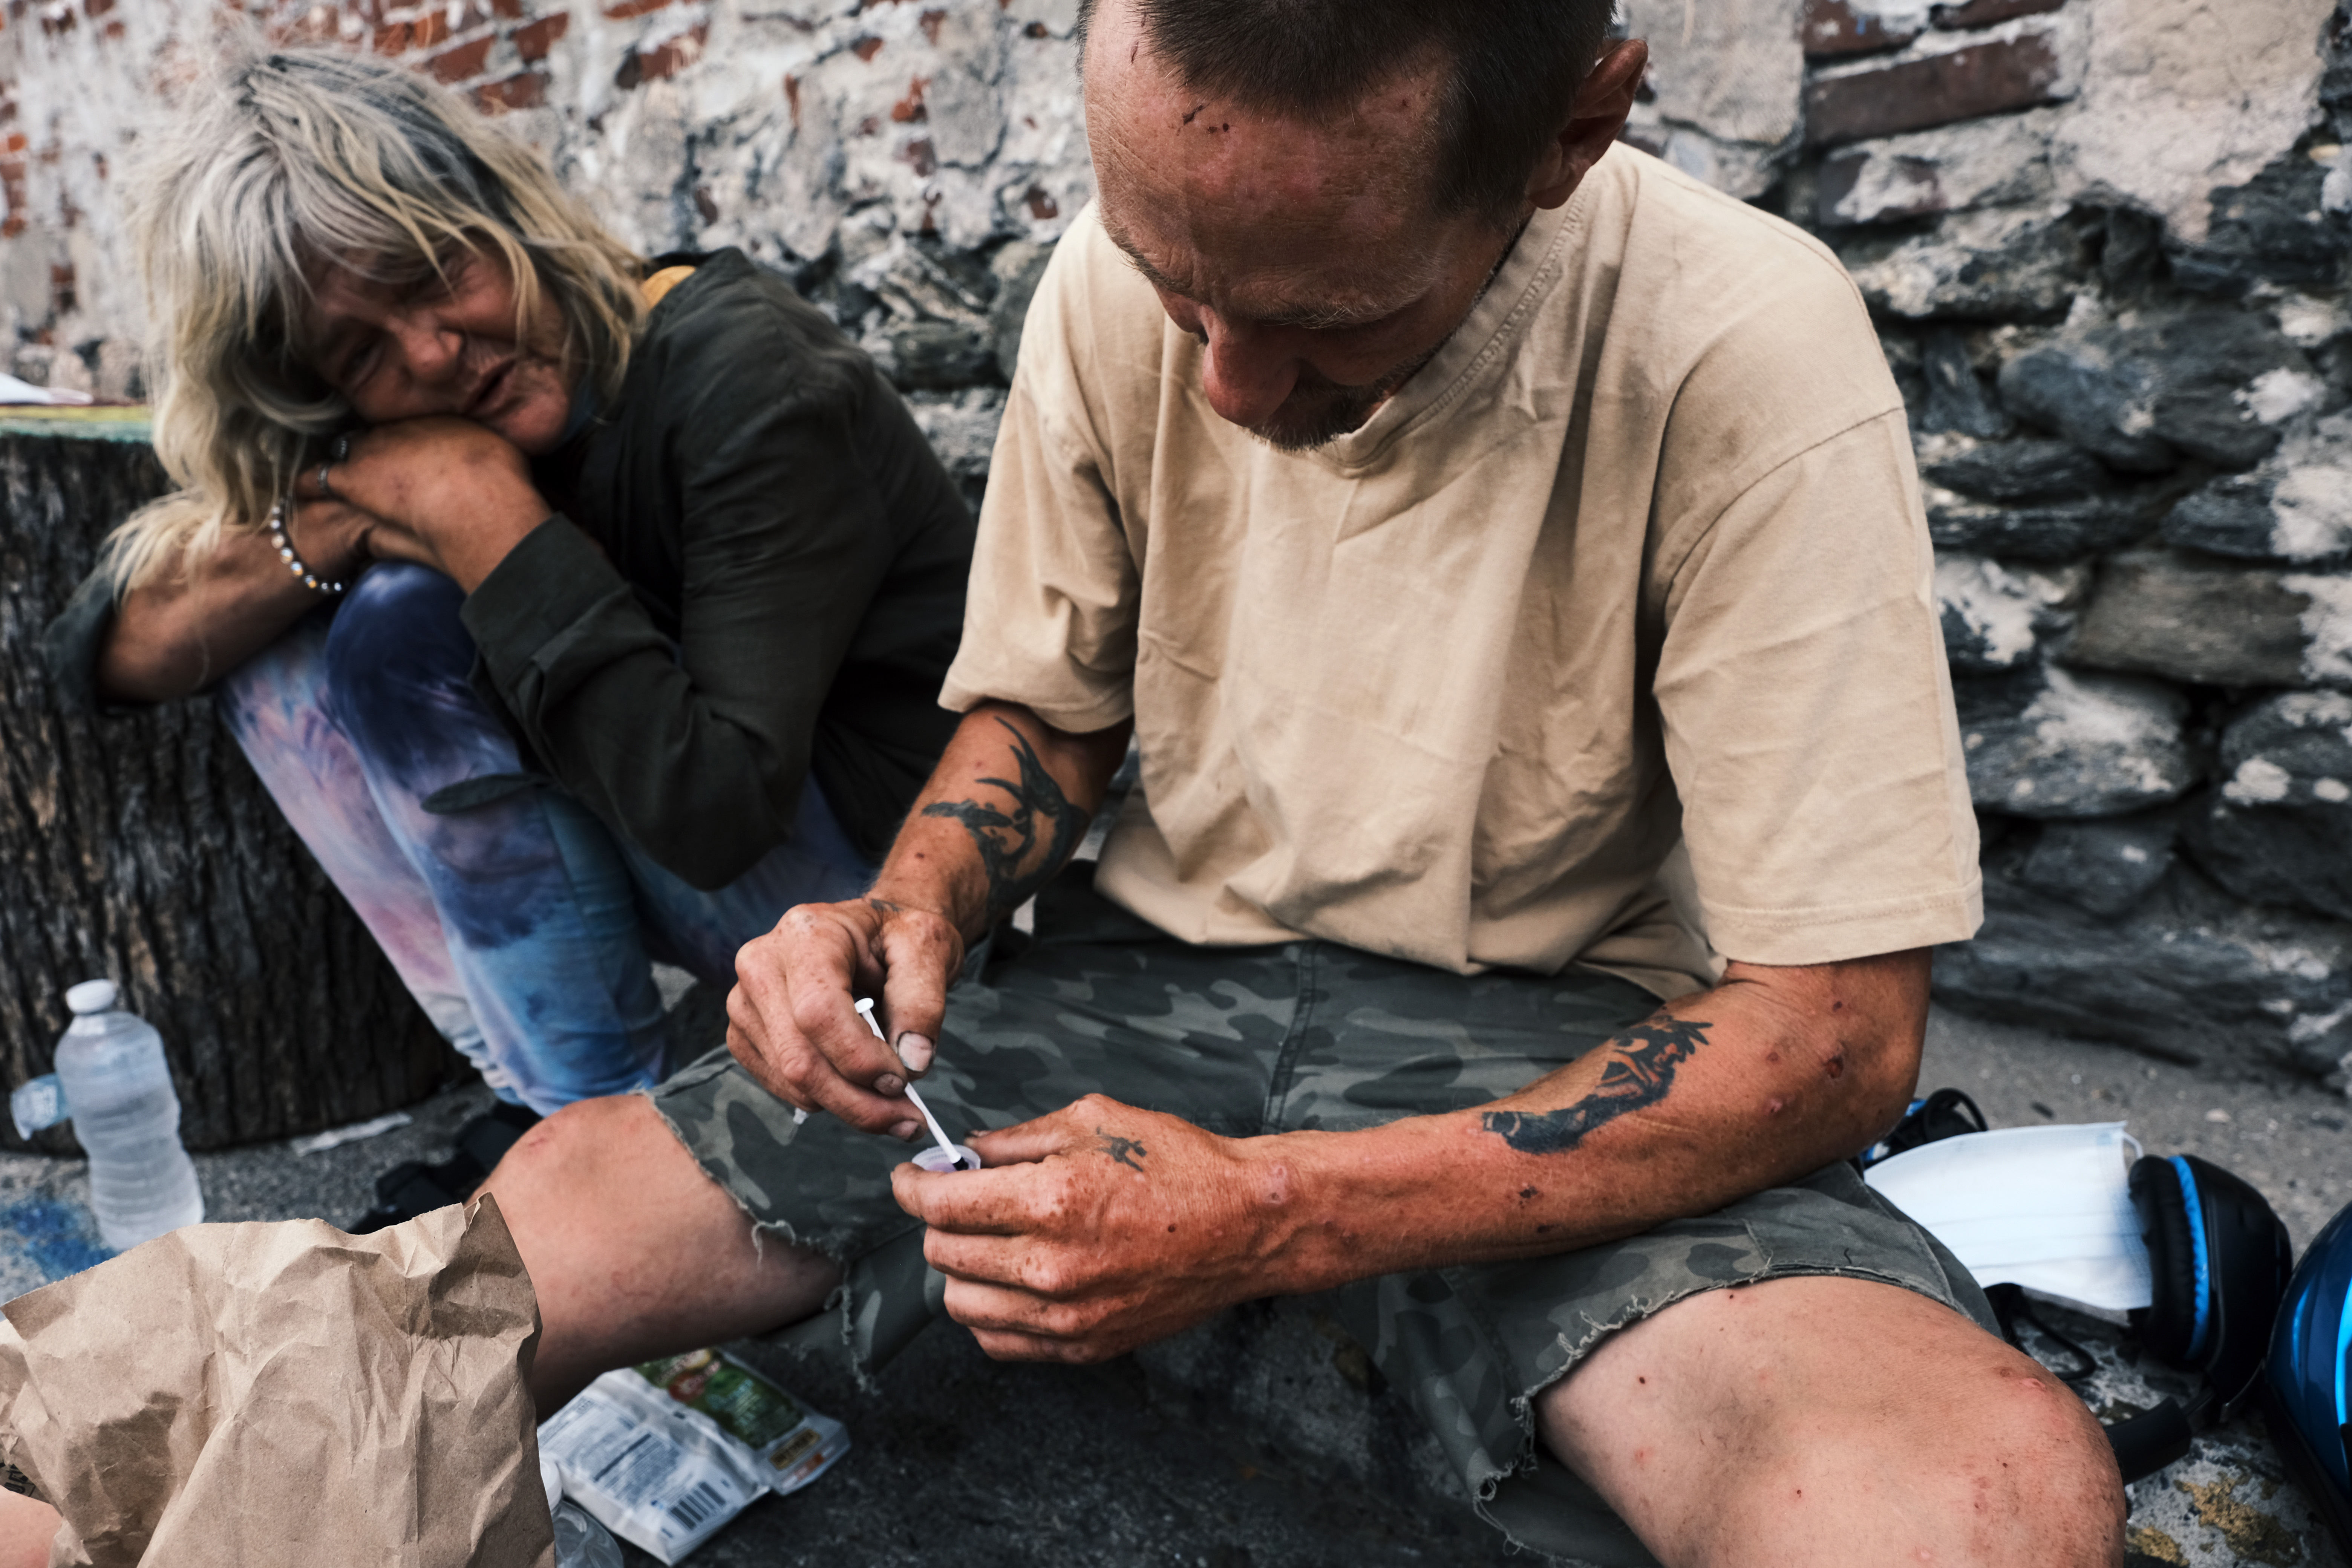 Two heroin users shoot up on the street in Kensington, Philadelphia